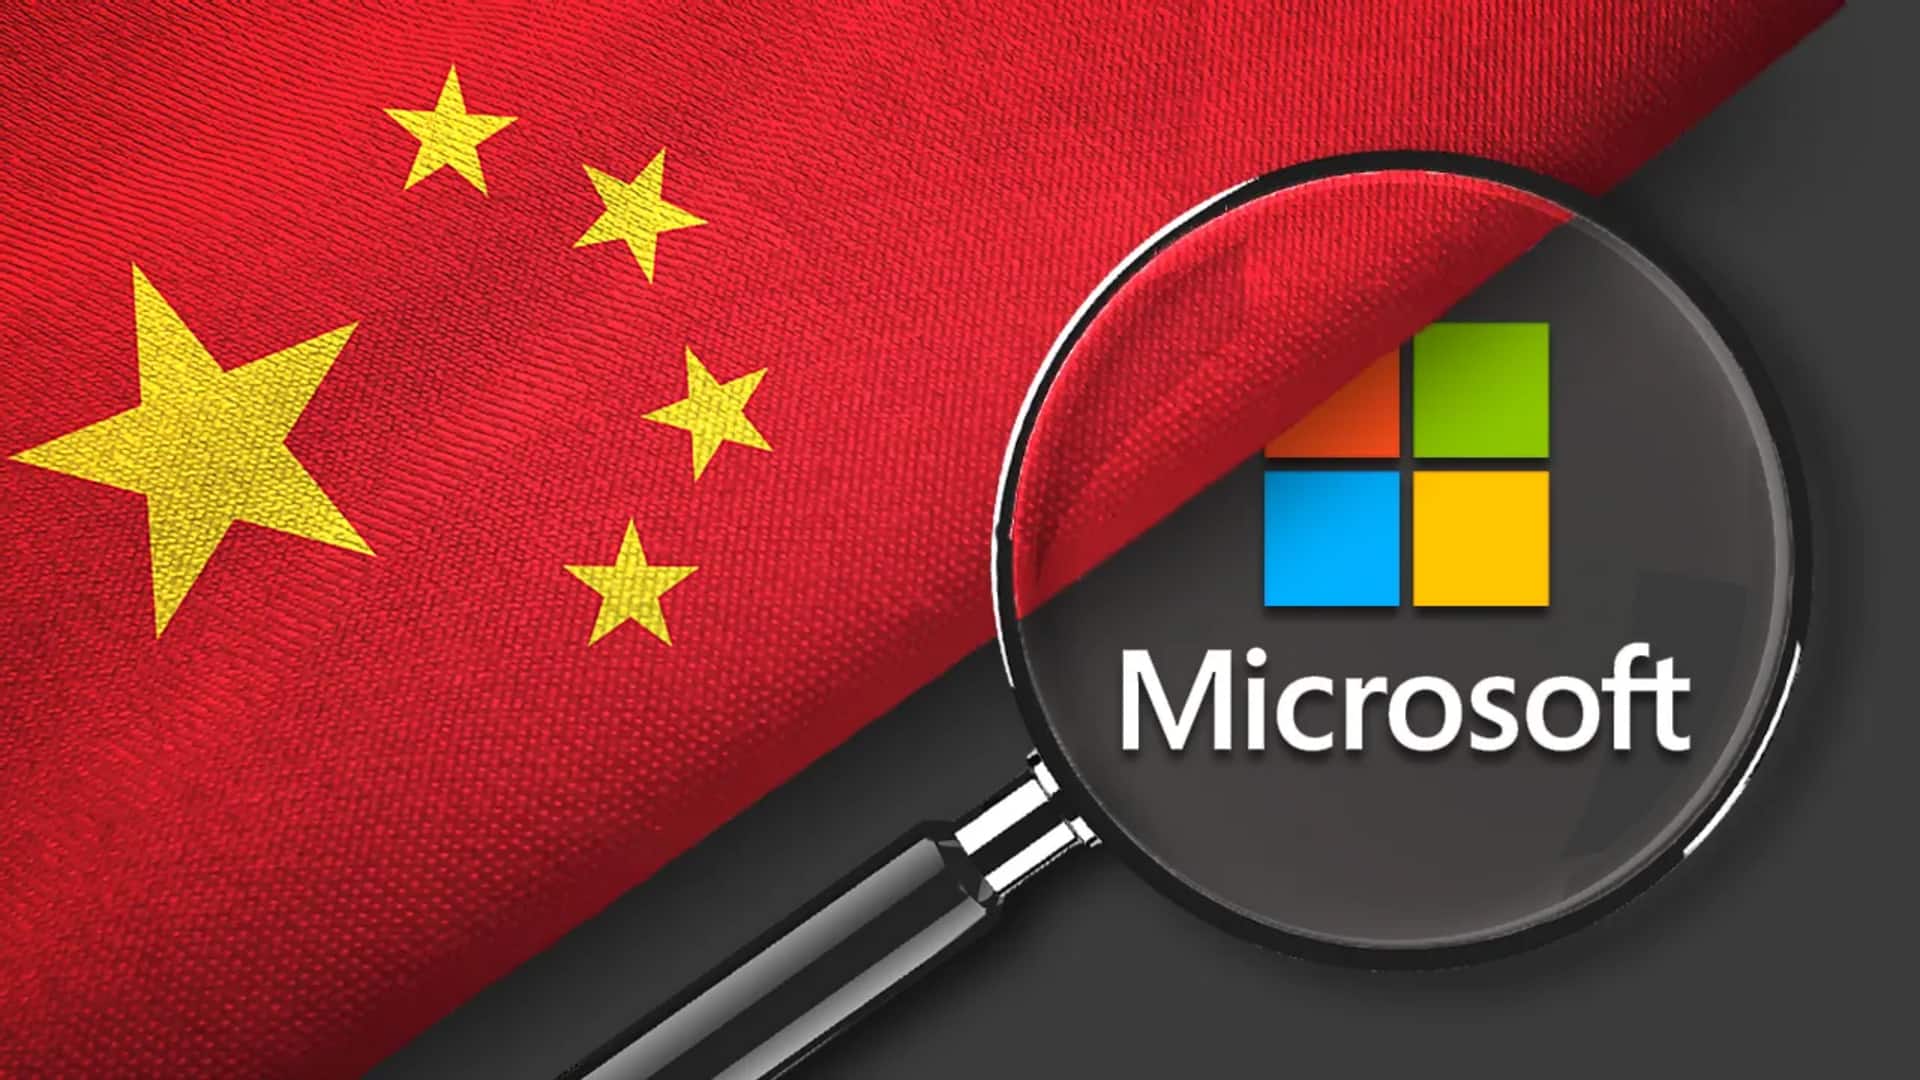 China will use AI to disrupt US, India elections: Microsoft